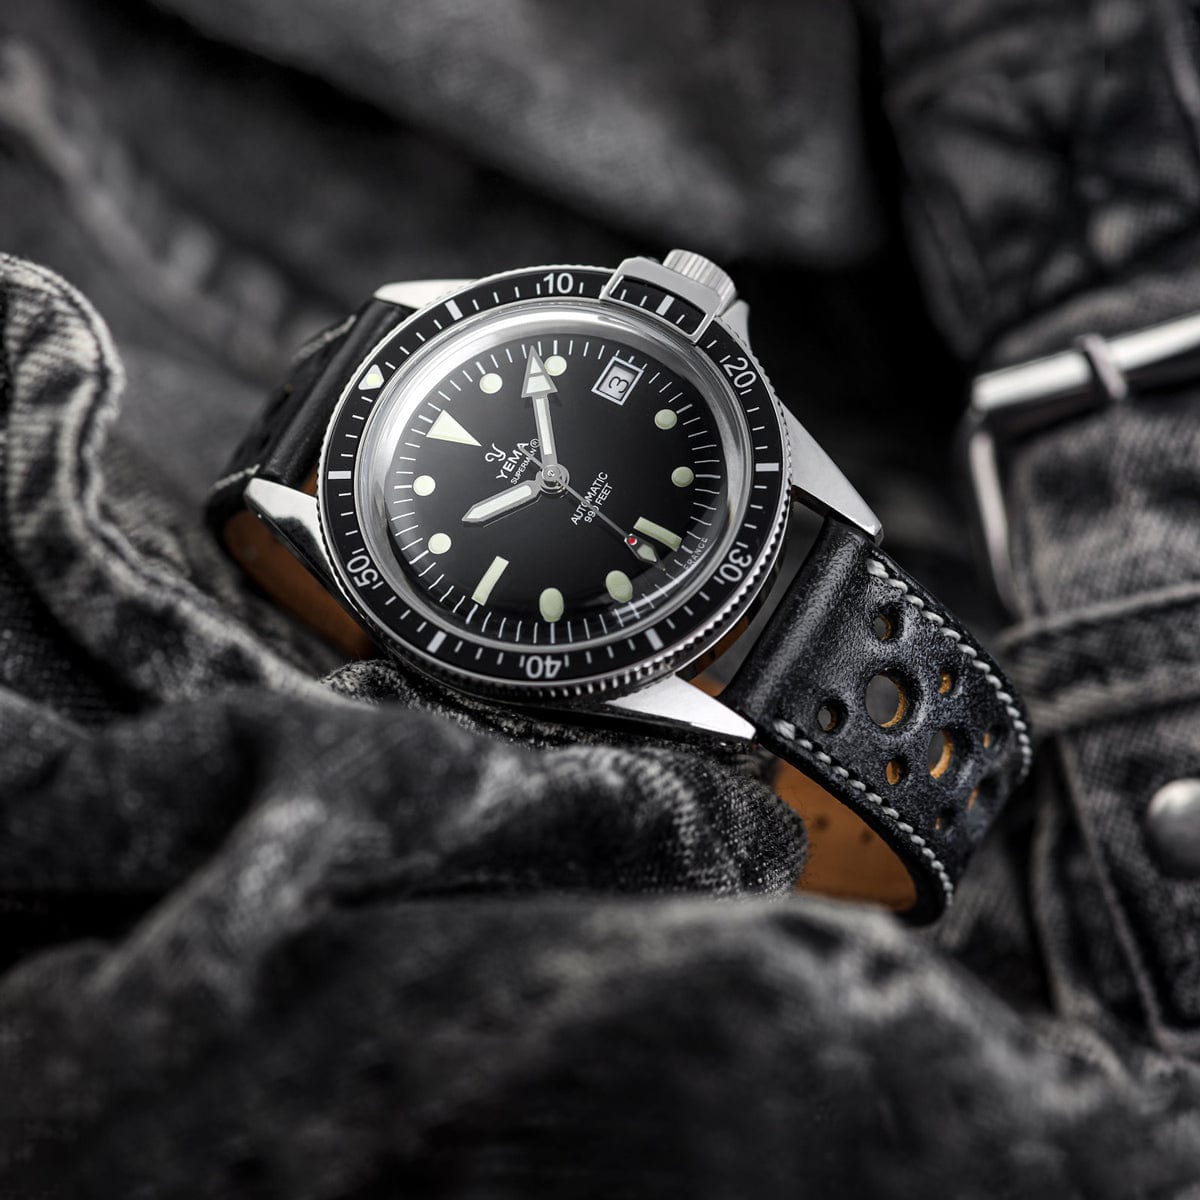 Radstock Racing Style Genuine Leather Watch Strap - Vintage Black